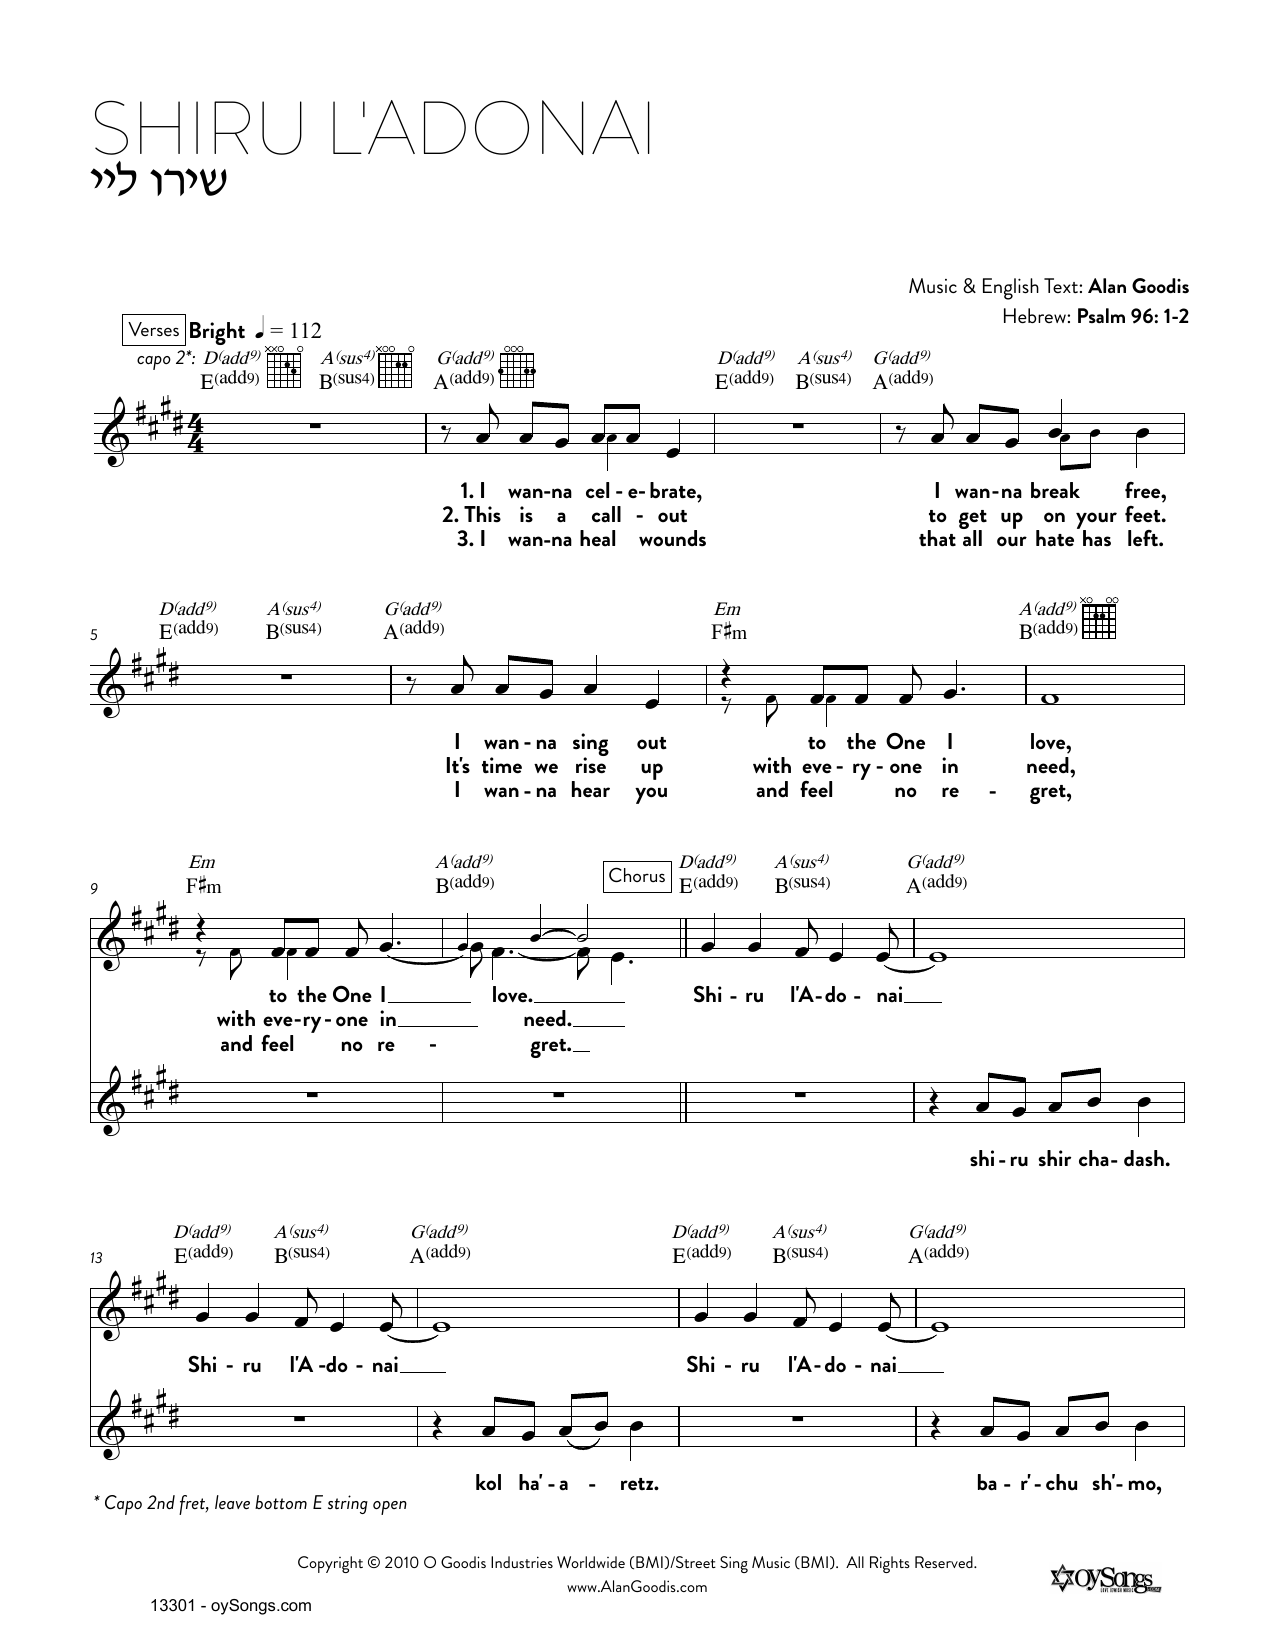 Alan Goodis Shiru L'adonai Sheet Music Notes & Chords for Real Book – Melody, Lyrics & Chords - Download or Print PDF